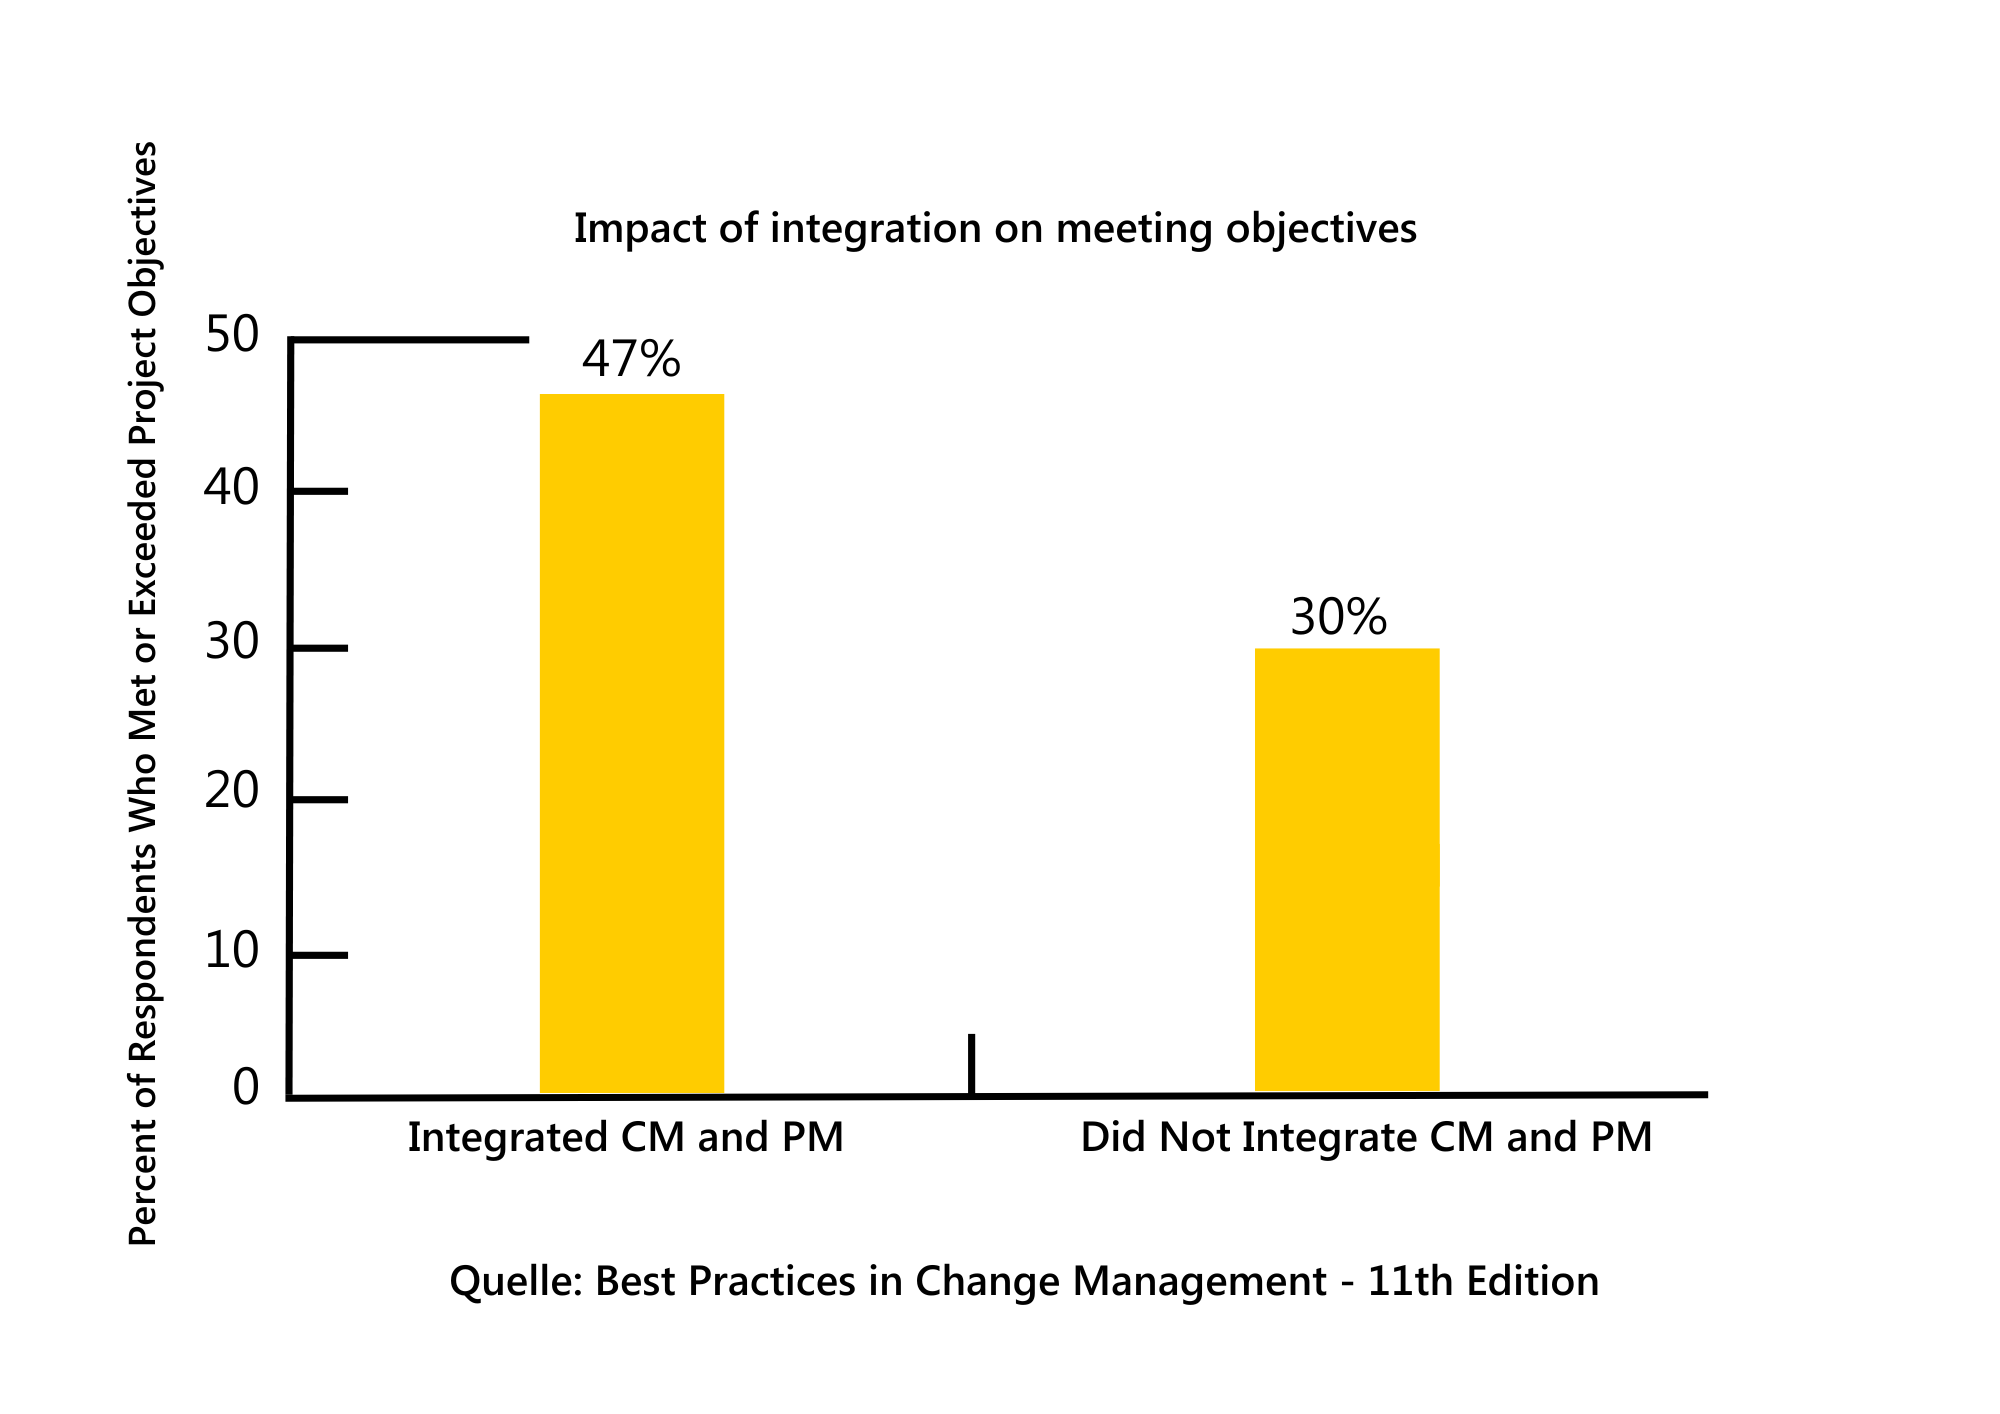 Schaubild Impact of integration on meeting objectives aus der Studie Best Practices in Change Management 11th Edition